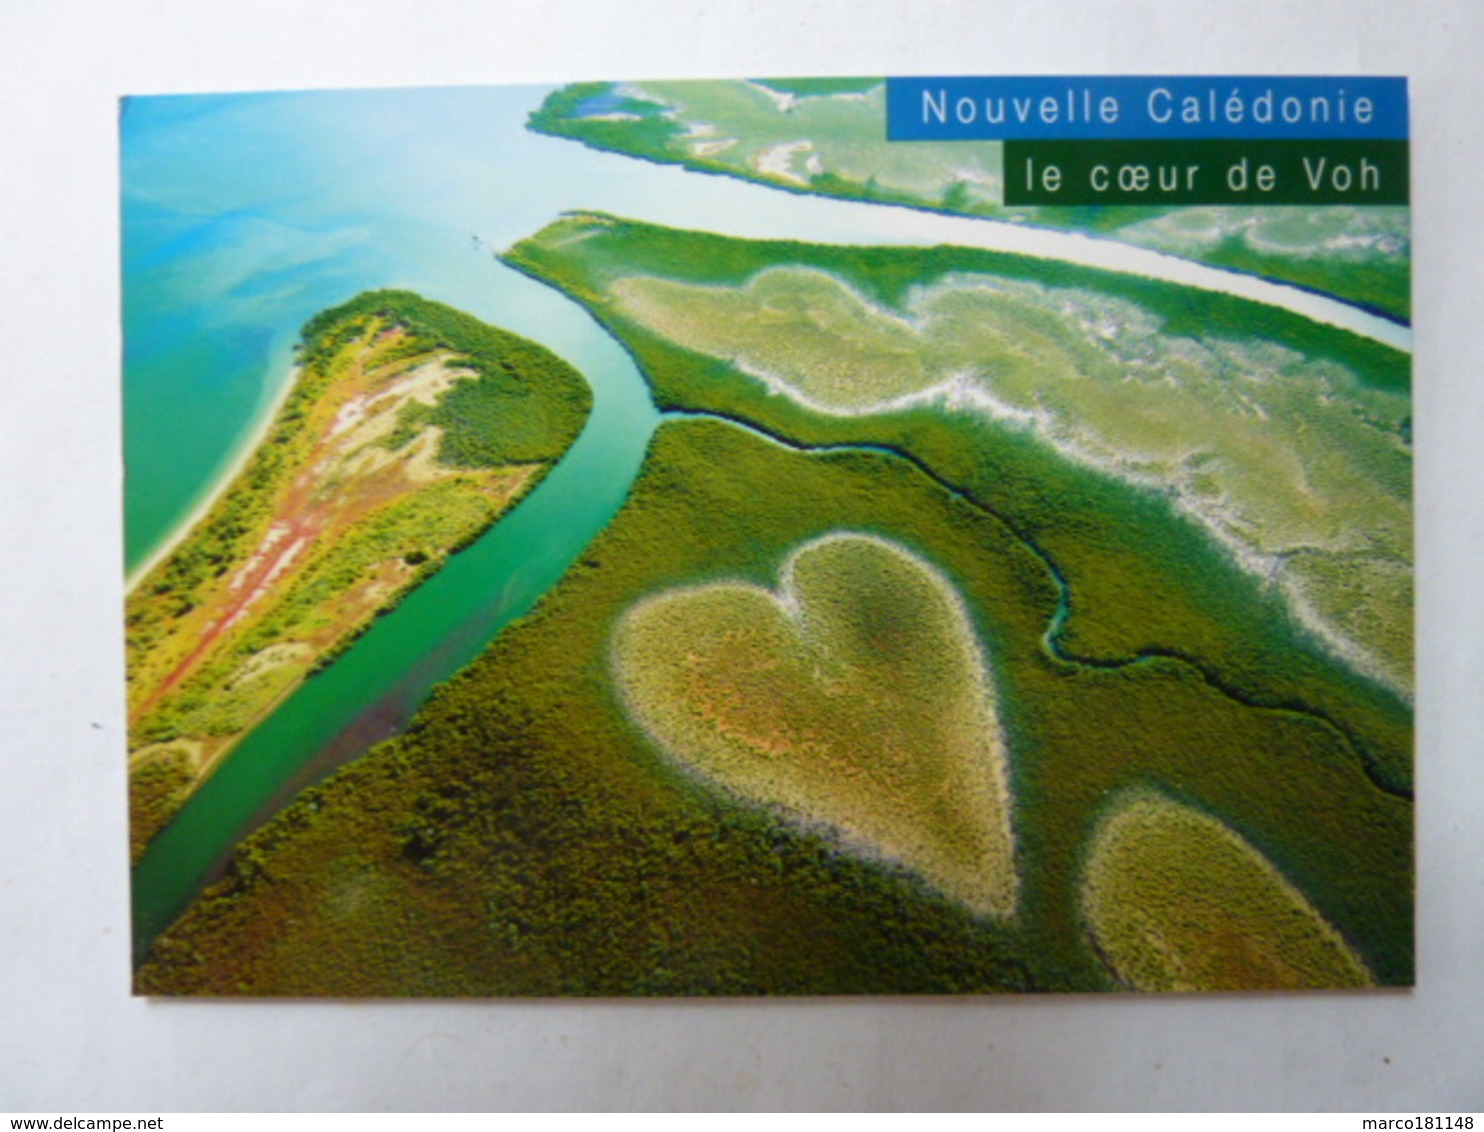 Le Coeur De Voh - New Caledonia